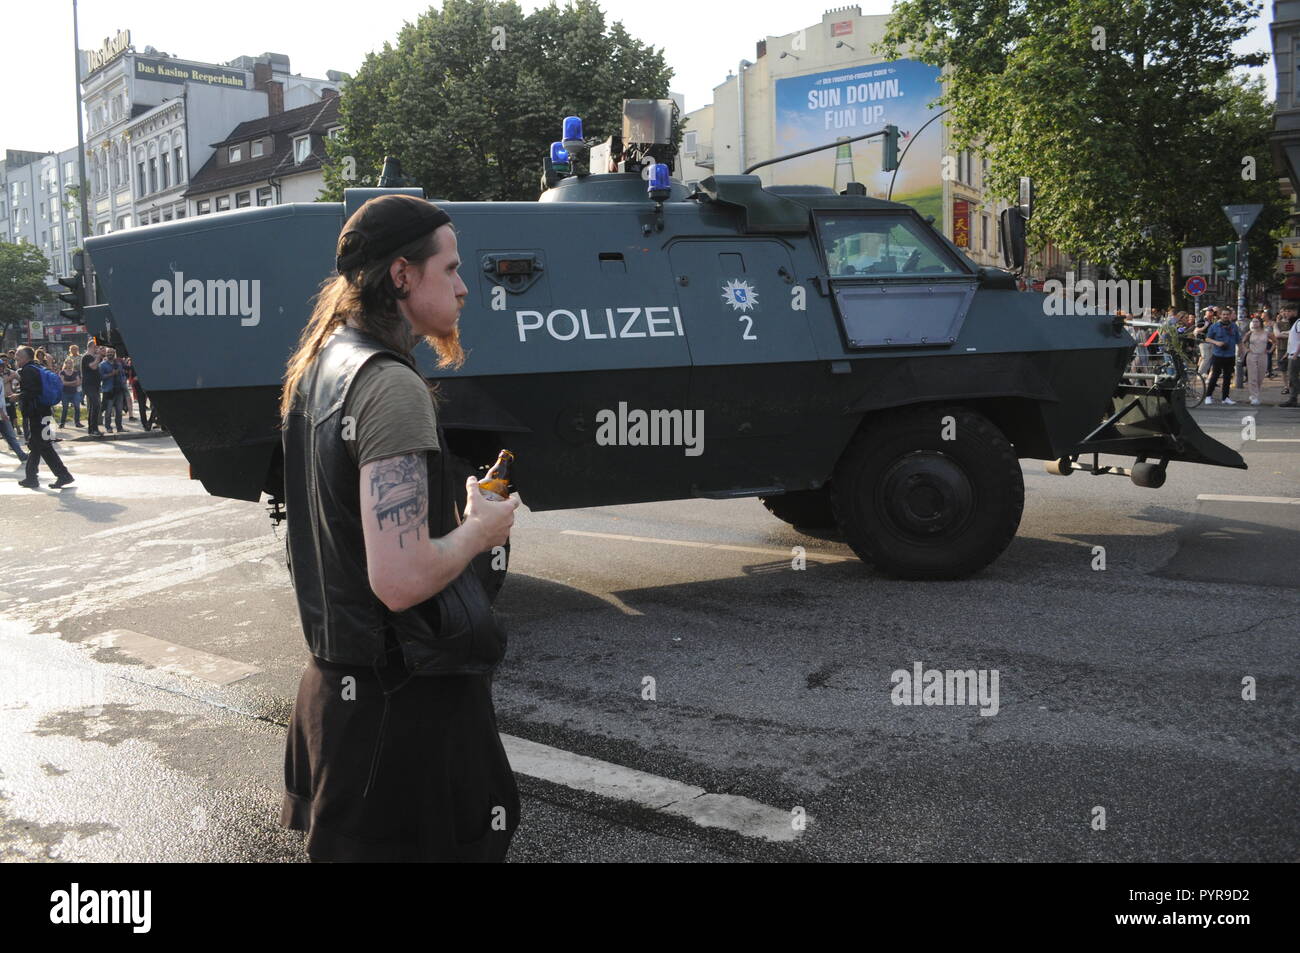 Anti G20 protest turn into violent urban riots in Hamburg, Germany Stock Photo